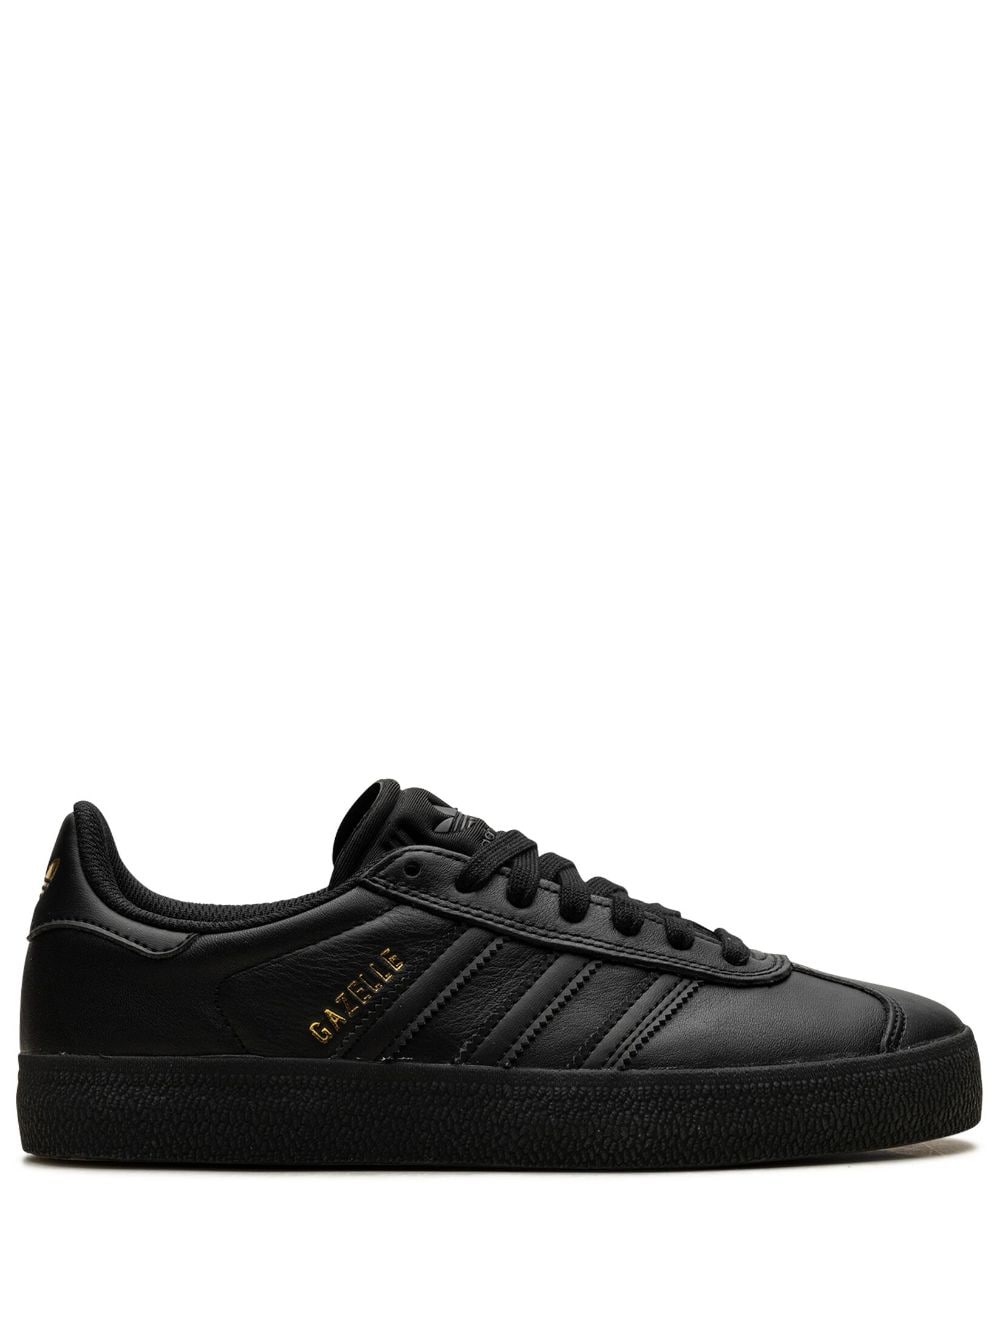 Adidas Originals Gazelle Adv "black/gold Metallic" Sneakers